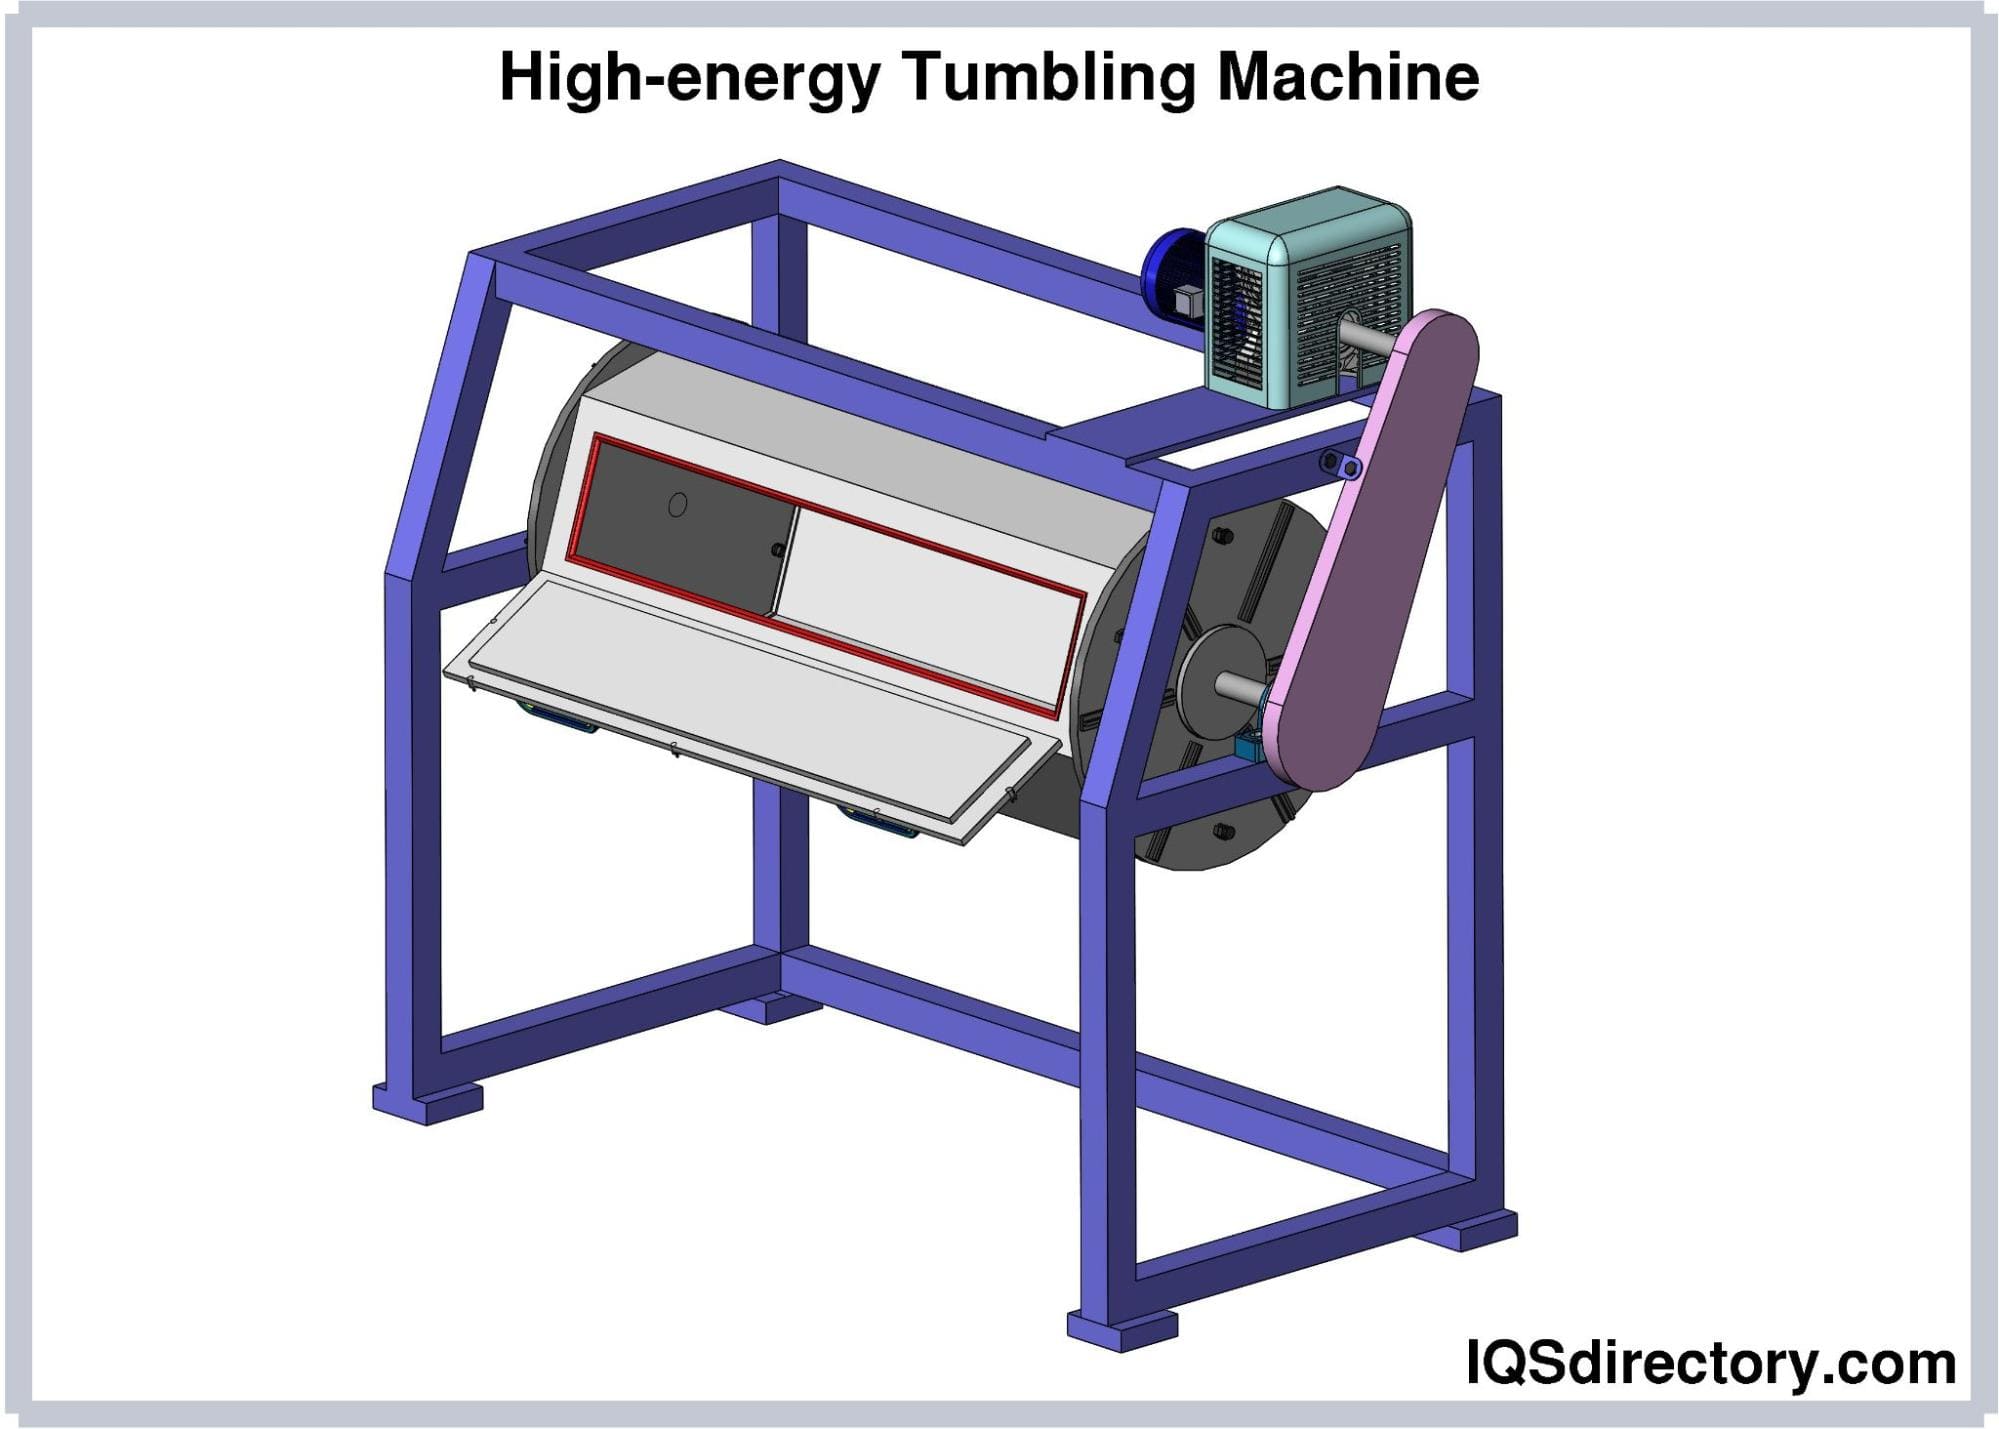 High-energy Tumbling Machine